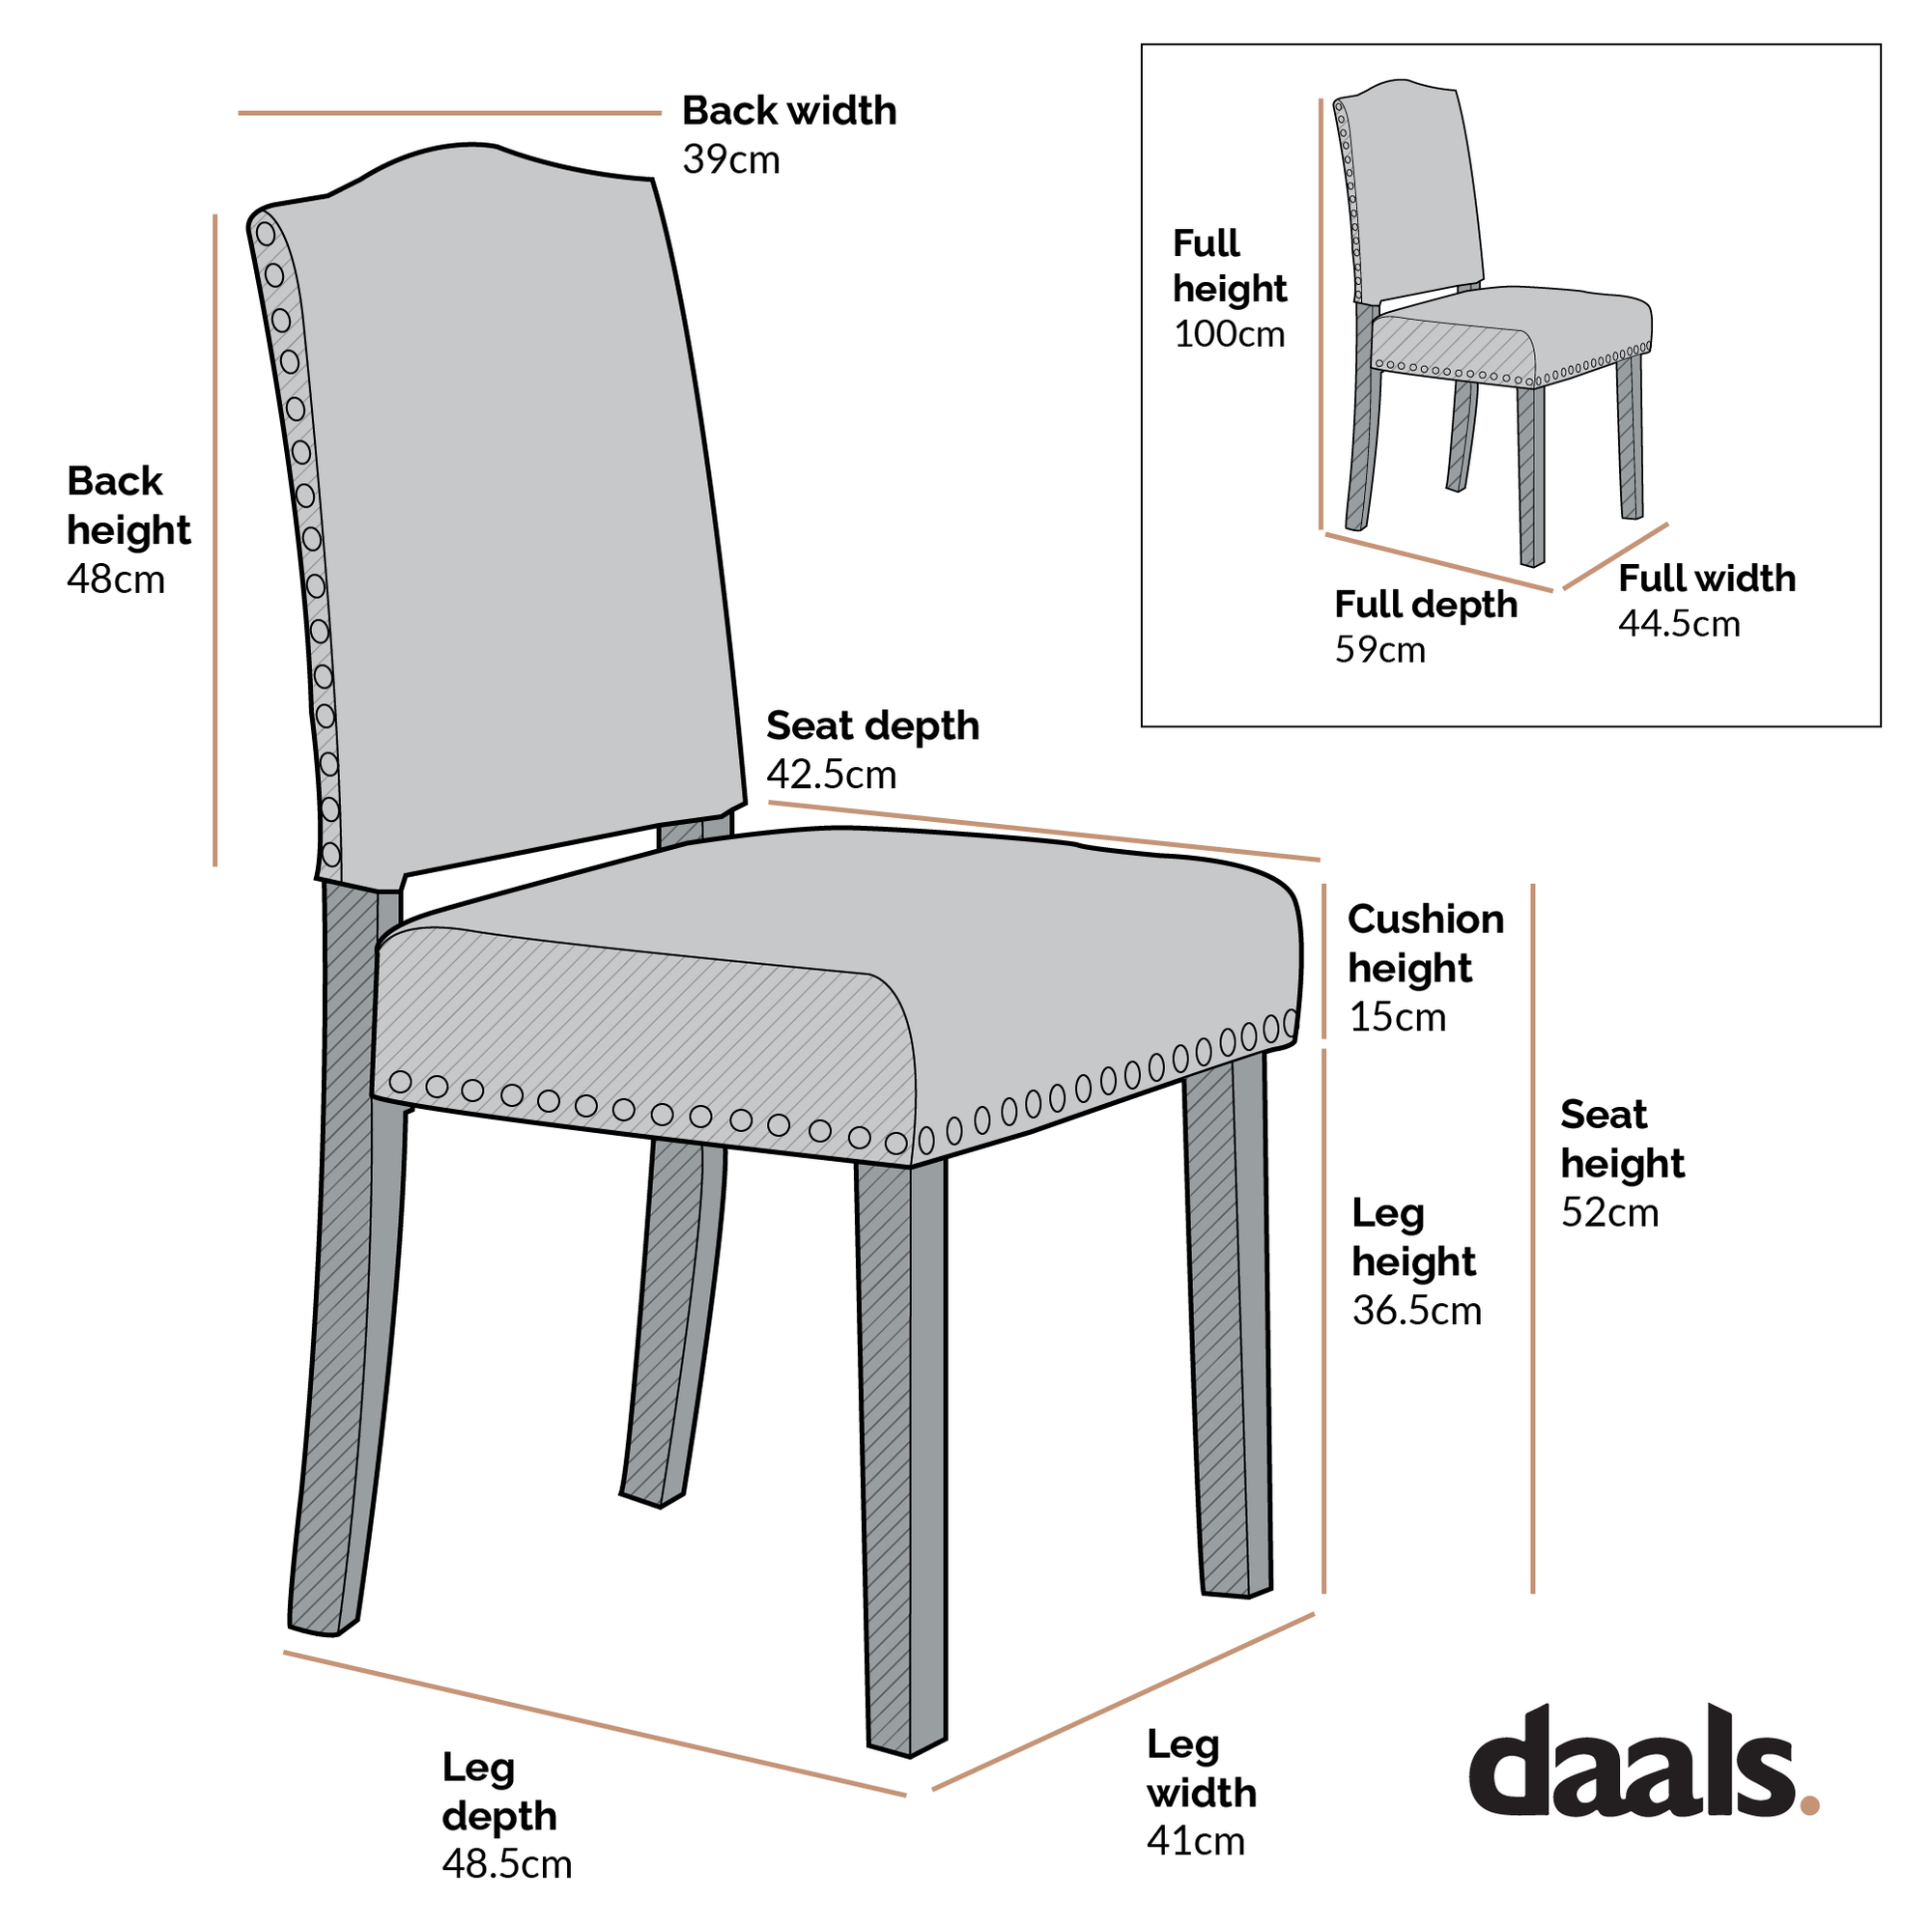 Draycott Set of 2 Grey Fabric Dining Chairs